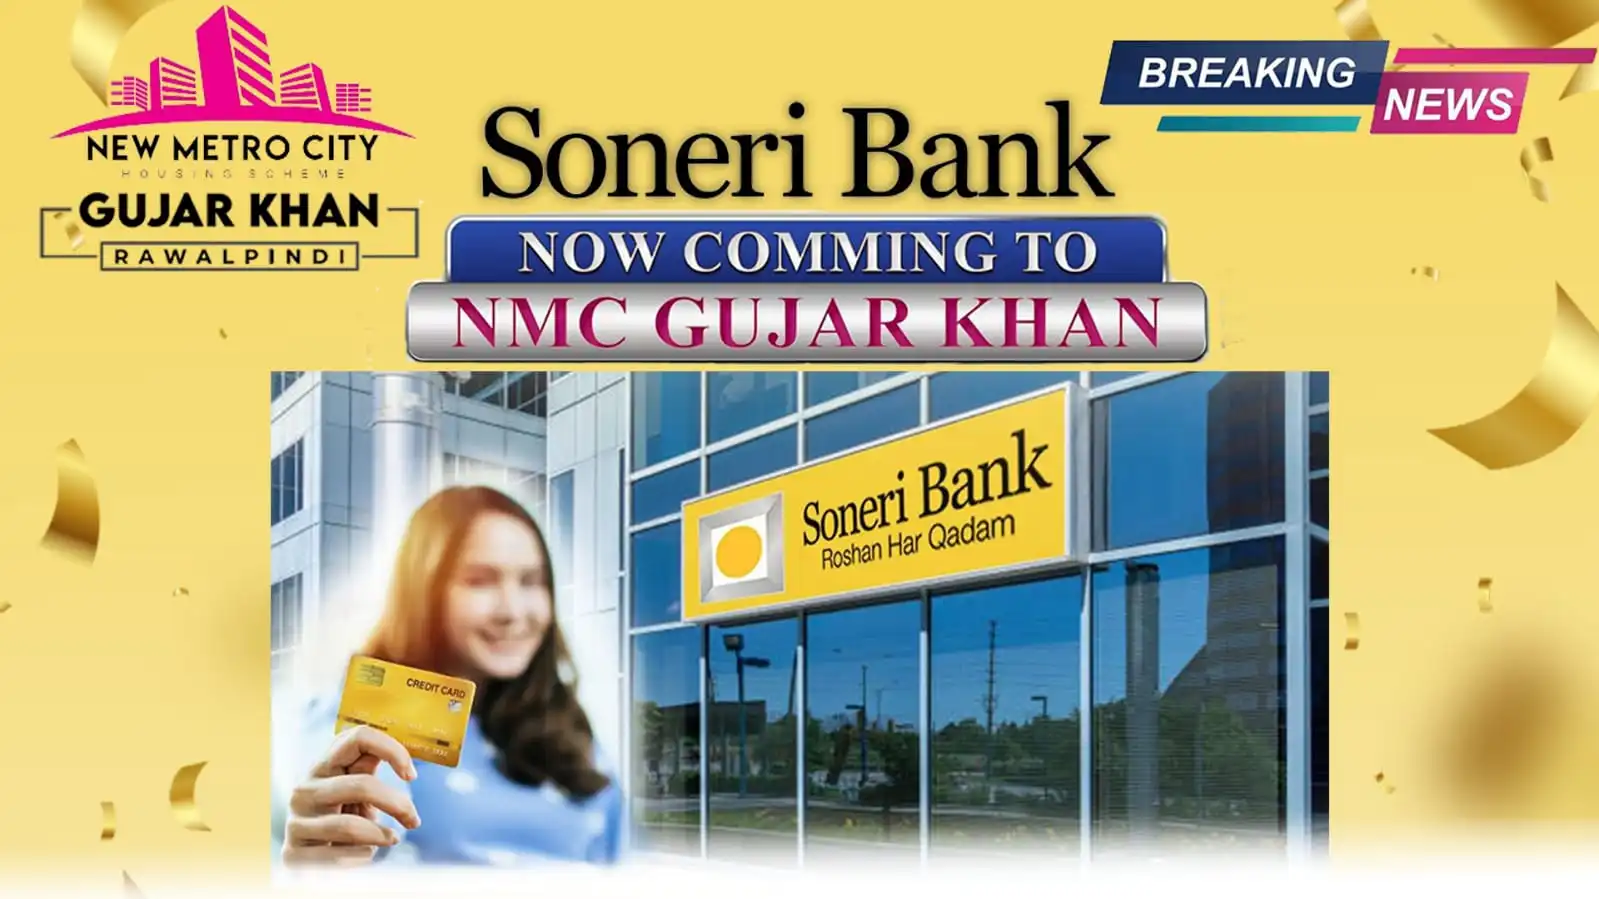 Soneri Bank Coming to New Metro City Gujar Khan